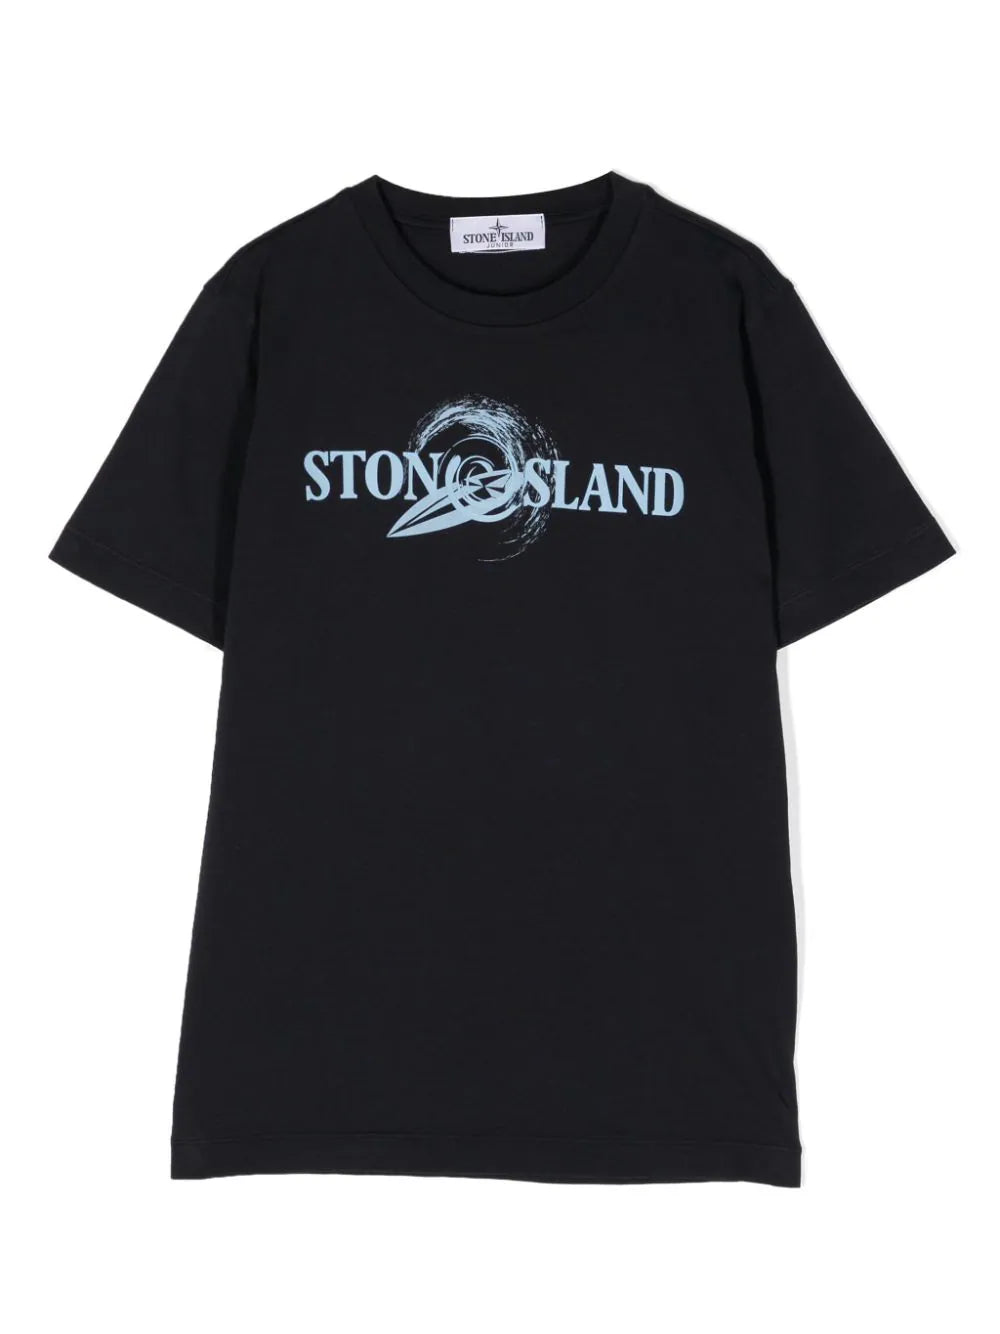 STONE ISLAND KIDS Compass Swirl Logo Graphic Print Cotton T-Shirt Navy - MAISONDEFASHION.COM